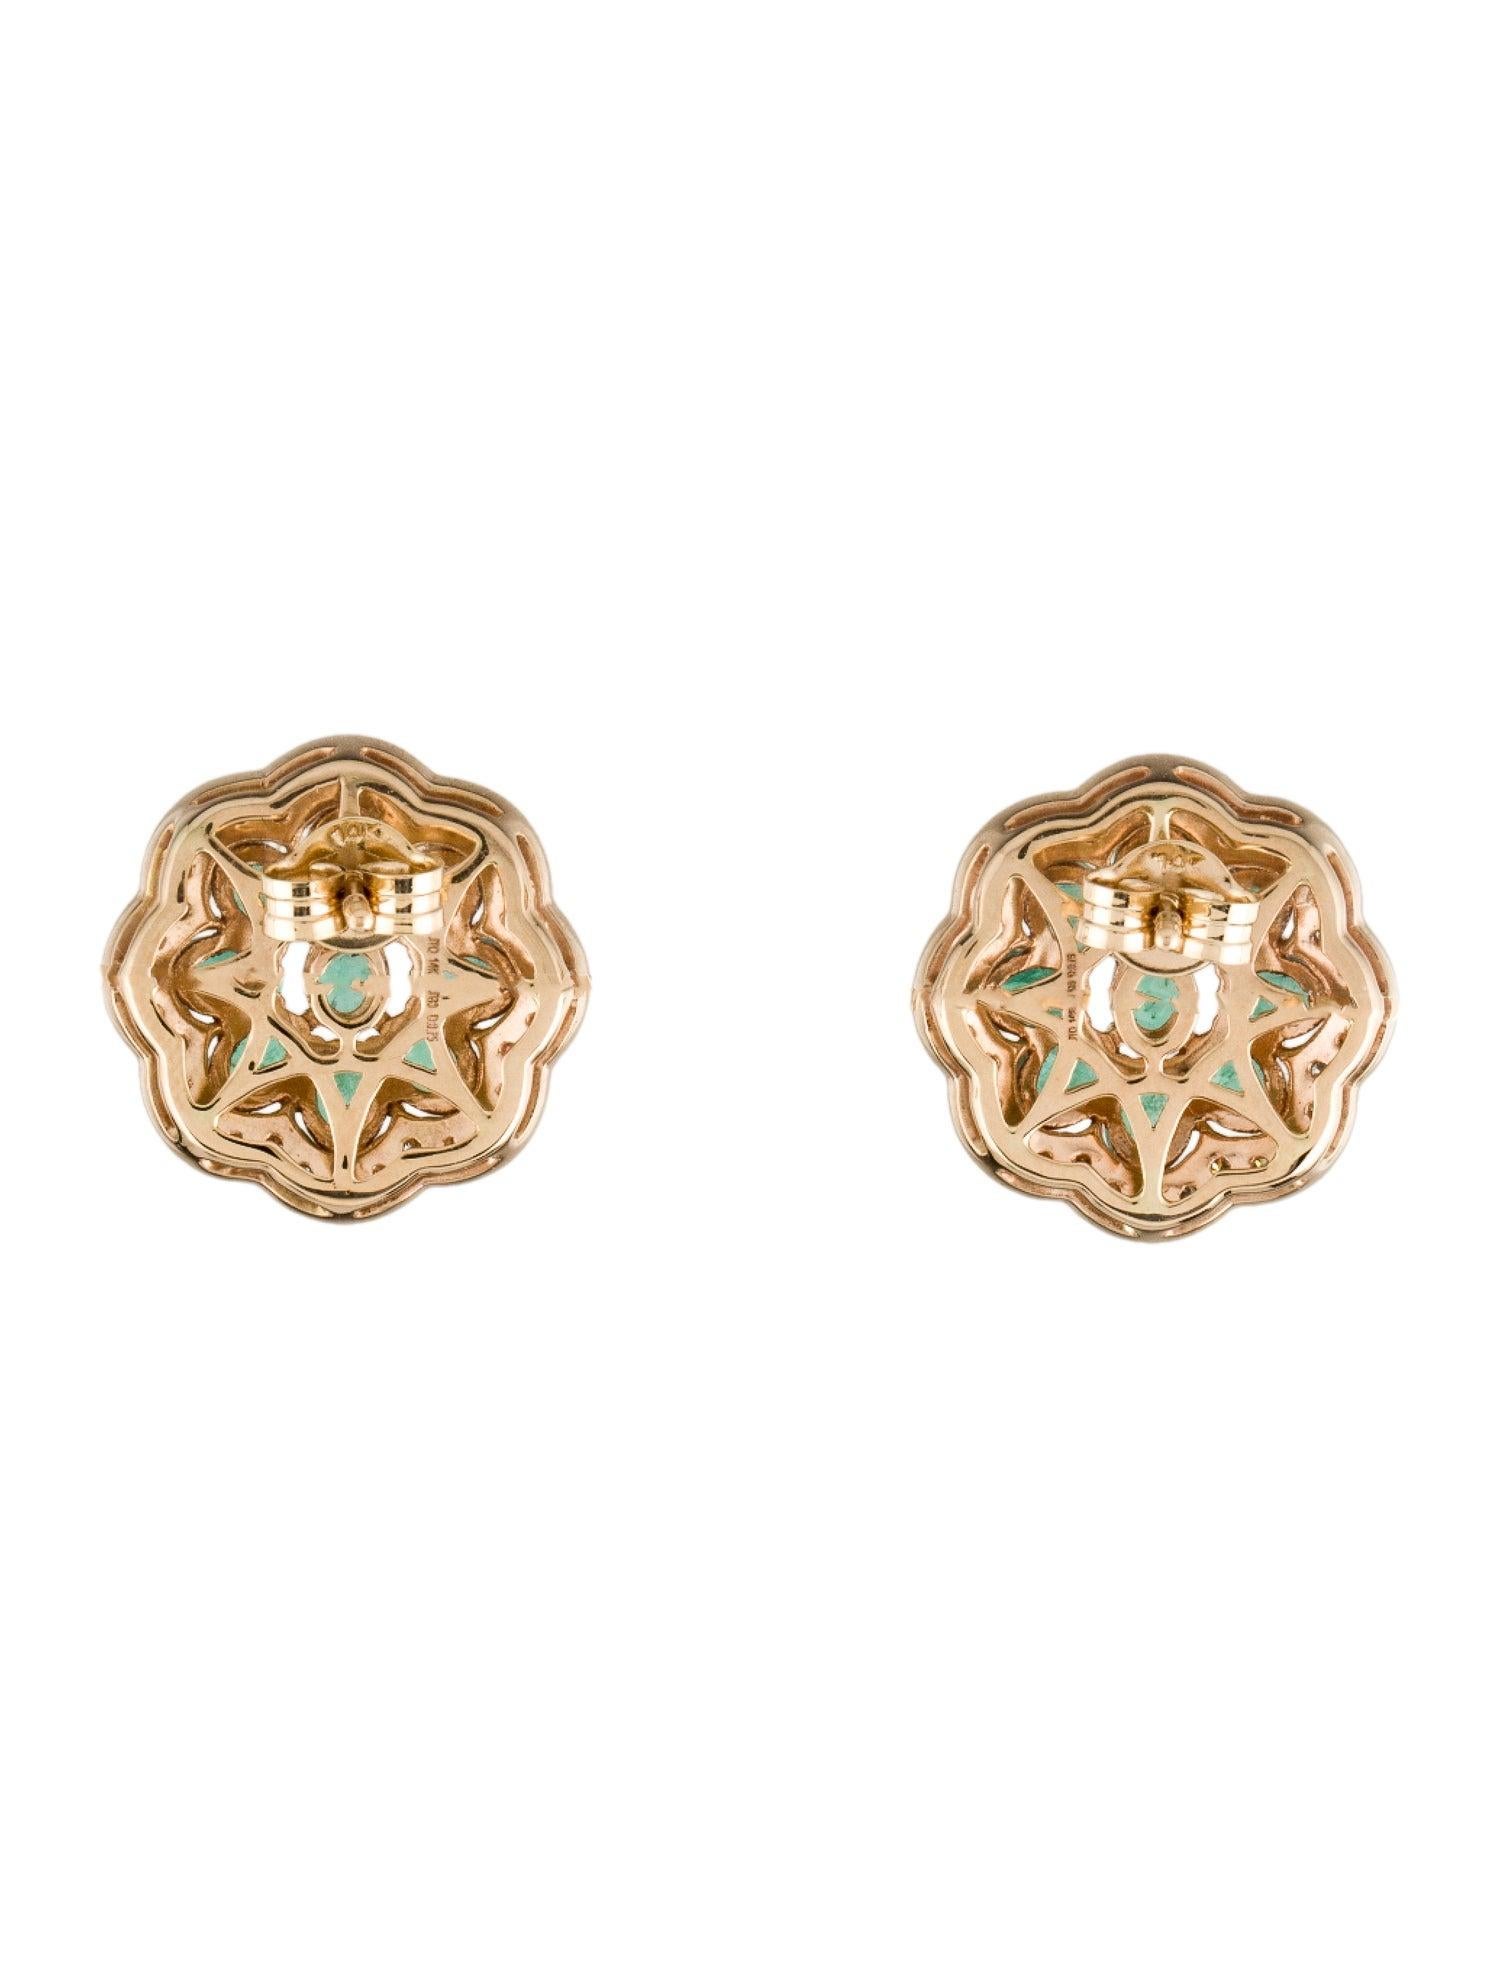 Brilliant Cut 14K Emerald & Diamond Stud Earrings- Exquisite Gemstone Jewelry Timeless Glamour